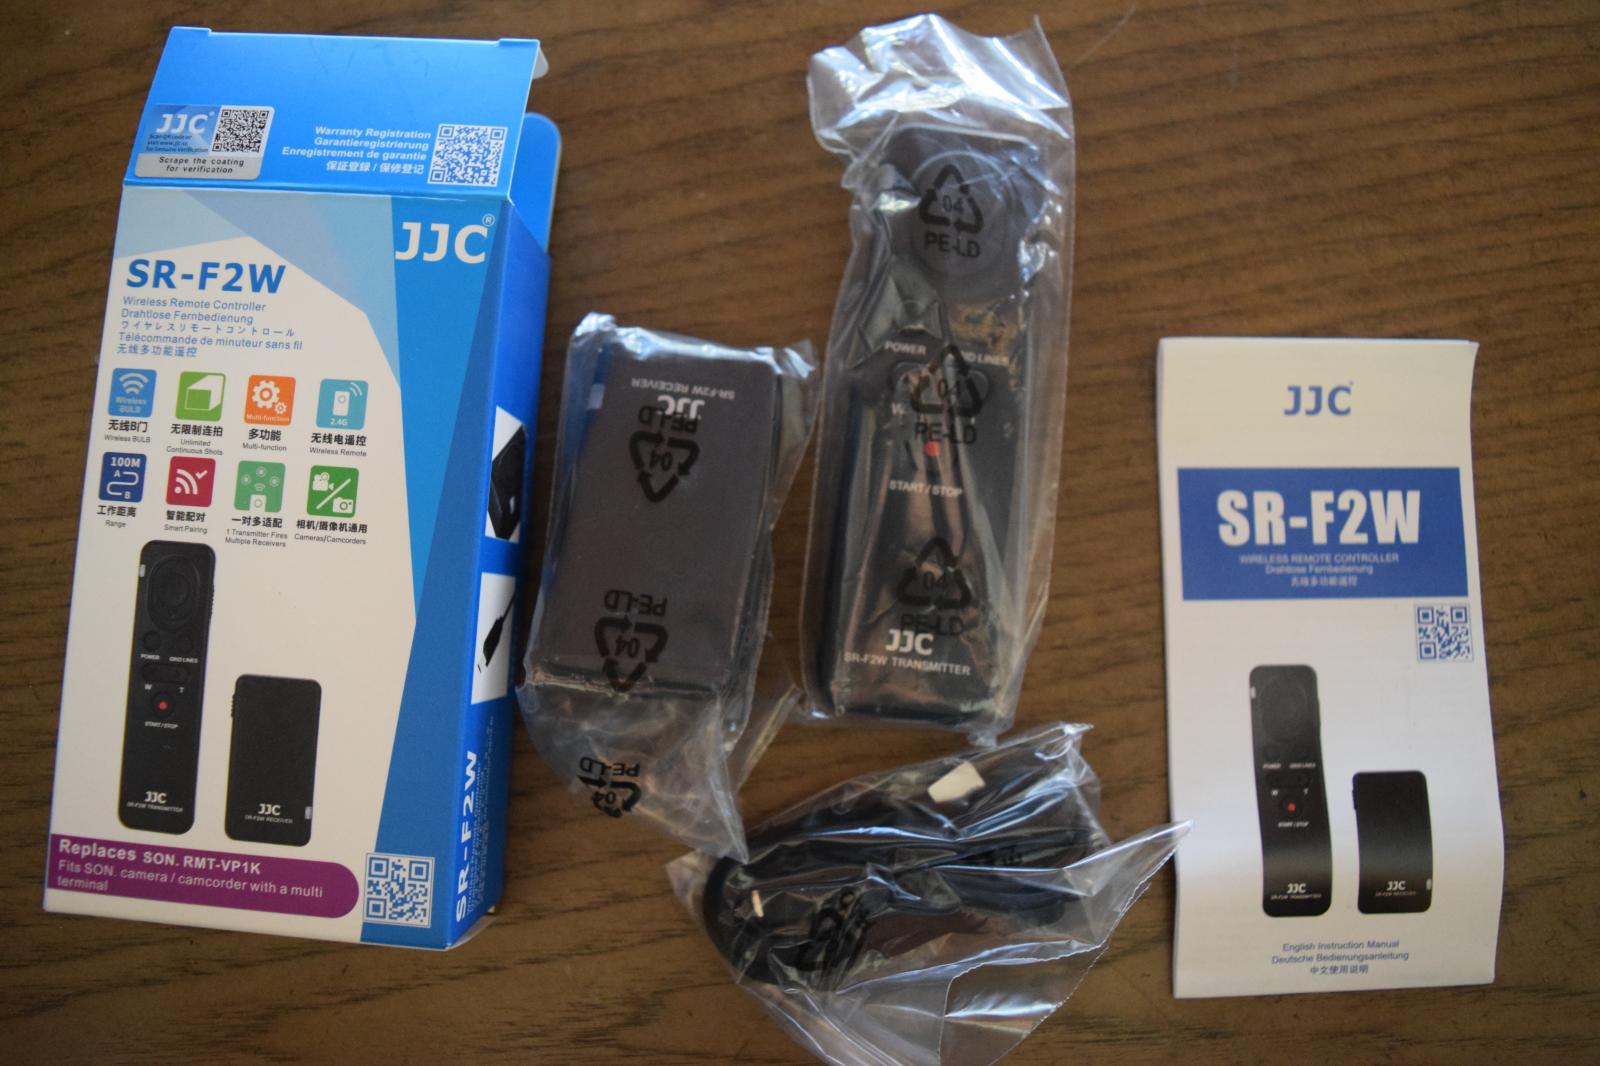 For sale SONY JJC SR-F2W remote for Sony cameras using multi-terminal 1 Year Warranty